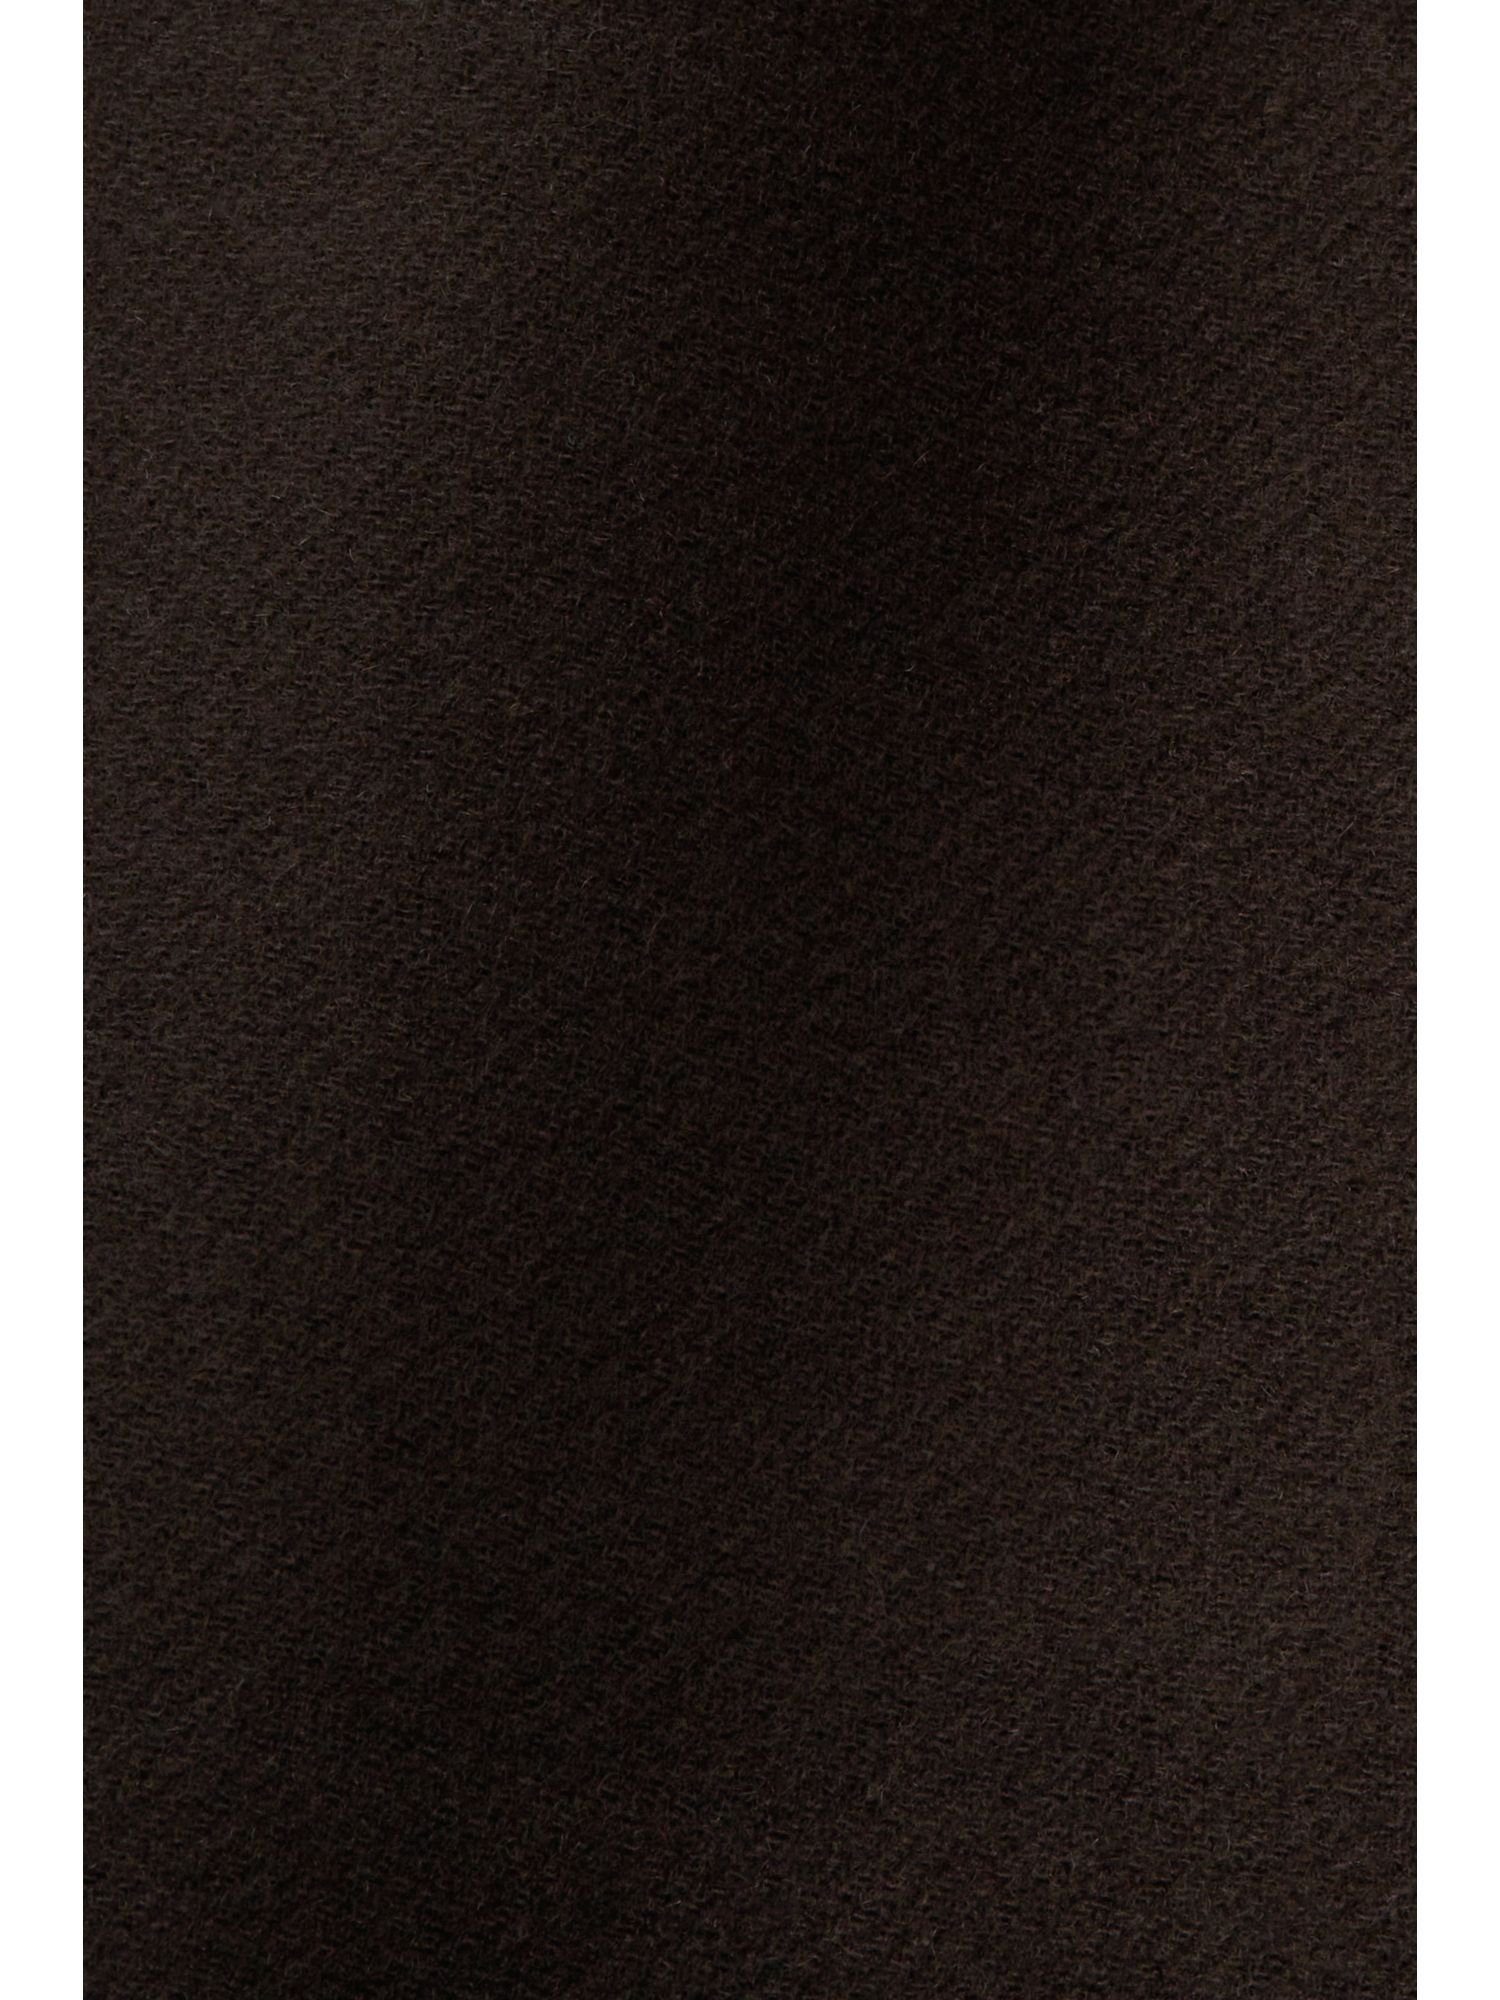 DARK Esprit aus KHAKI Collection Langmantel Coat Mac Wolle